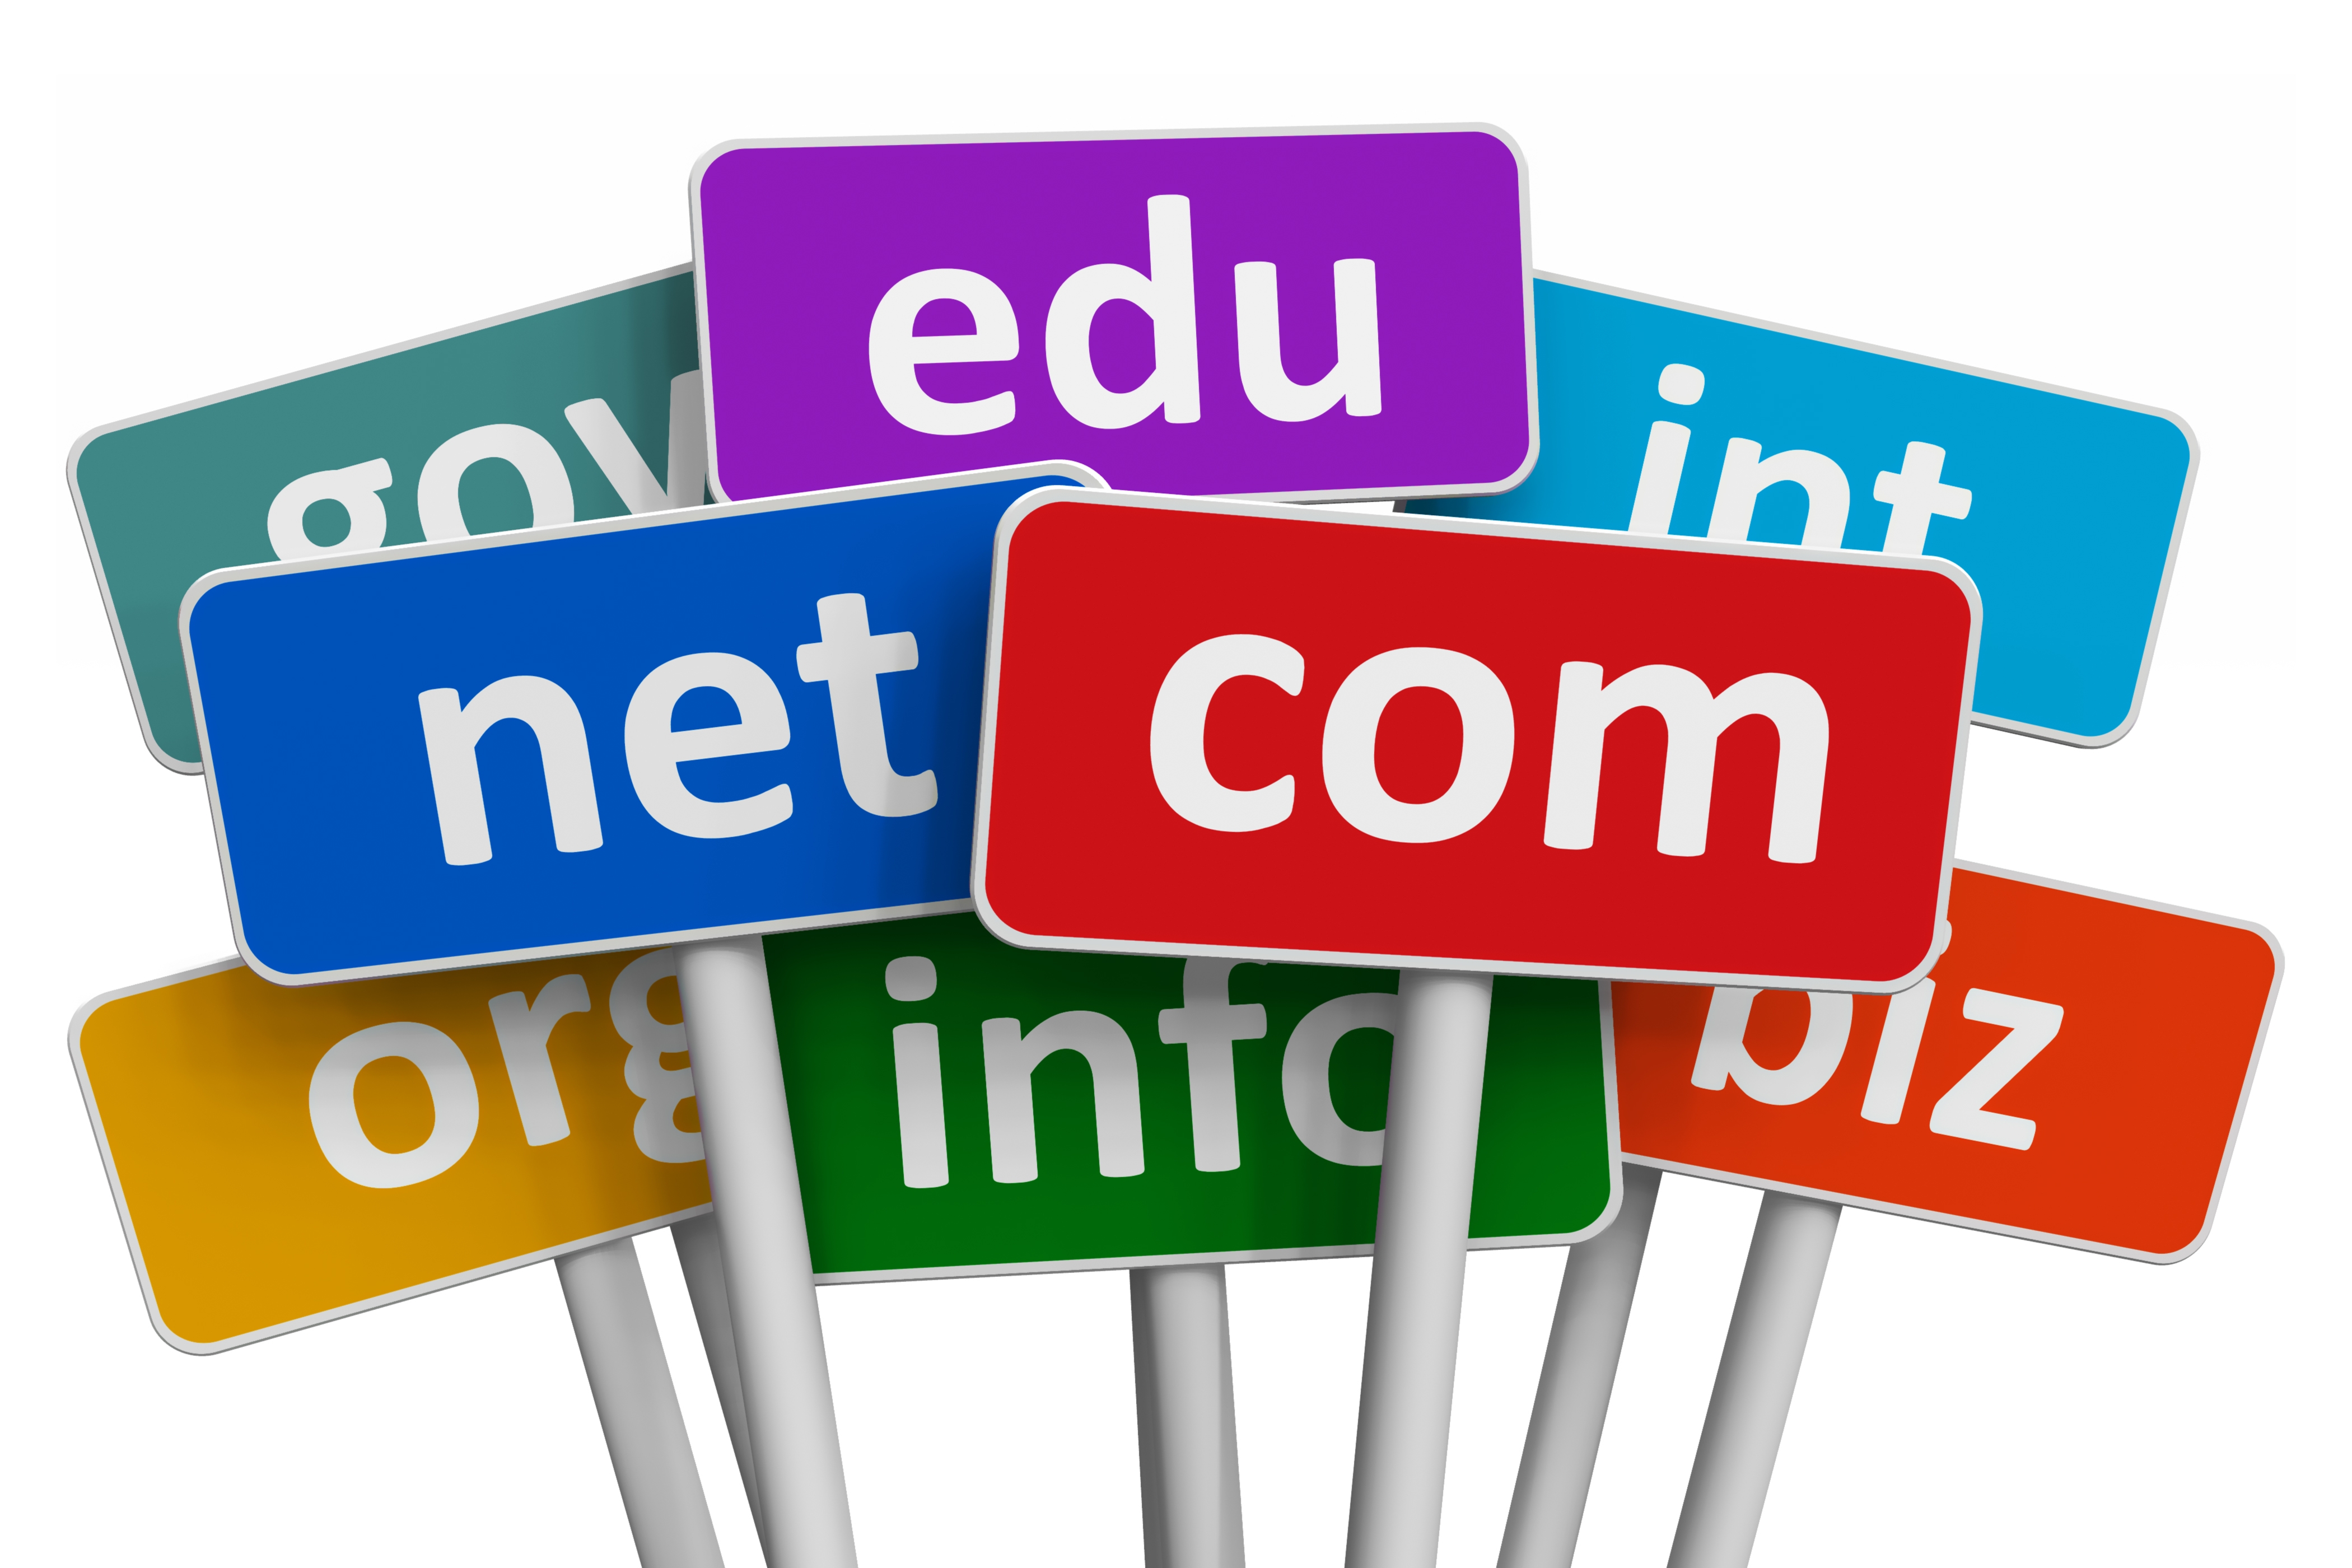 bigstock-Domain-names-and-internet-conc-20750015